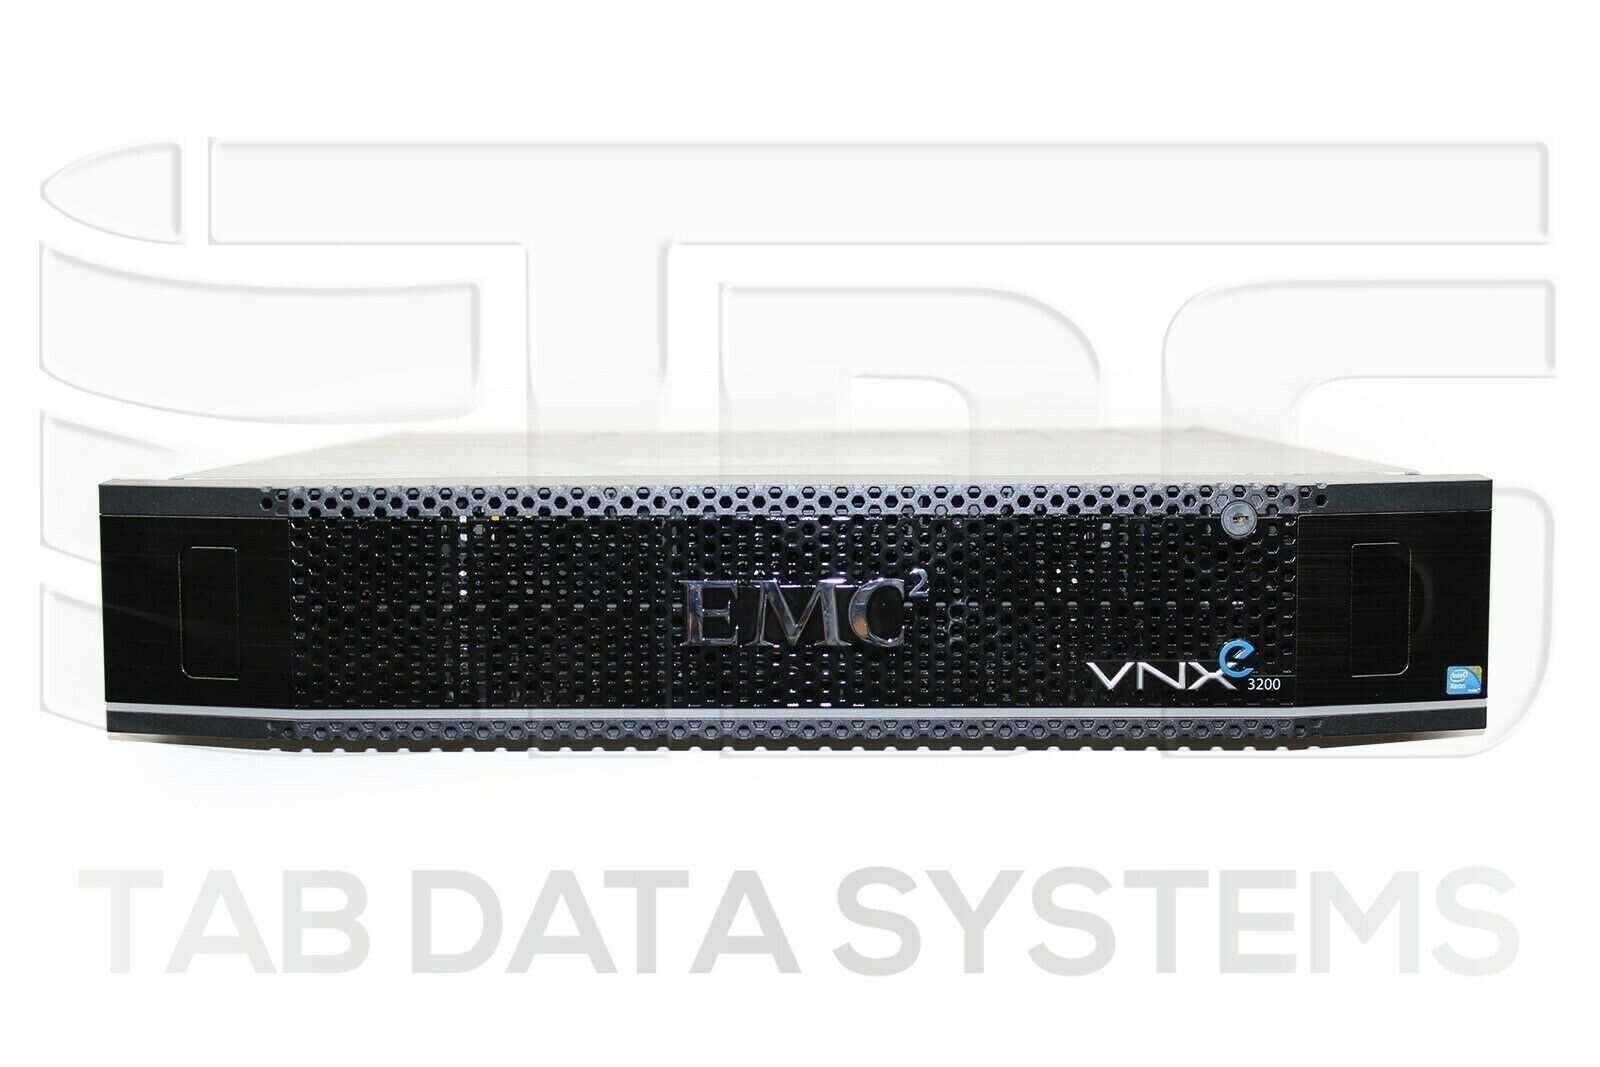 EMC VNXe3200 Unified System w/ 22x 600GB 10K HDD, 3x 200GB SSD, Dual SP